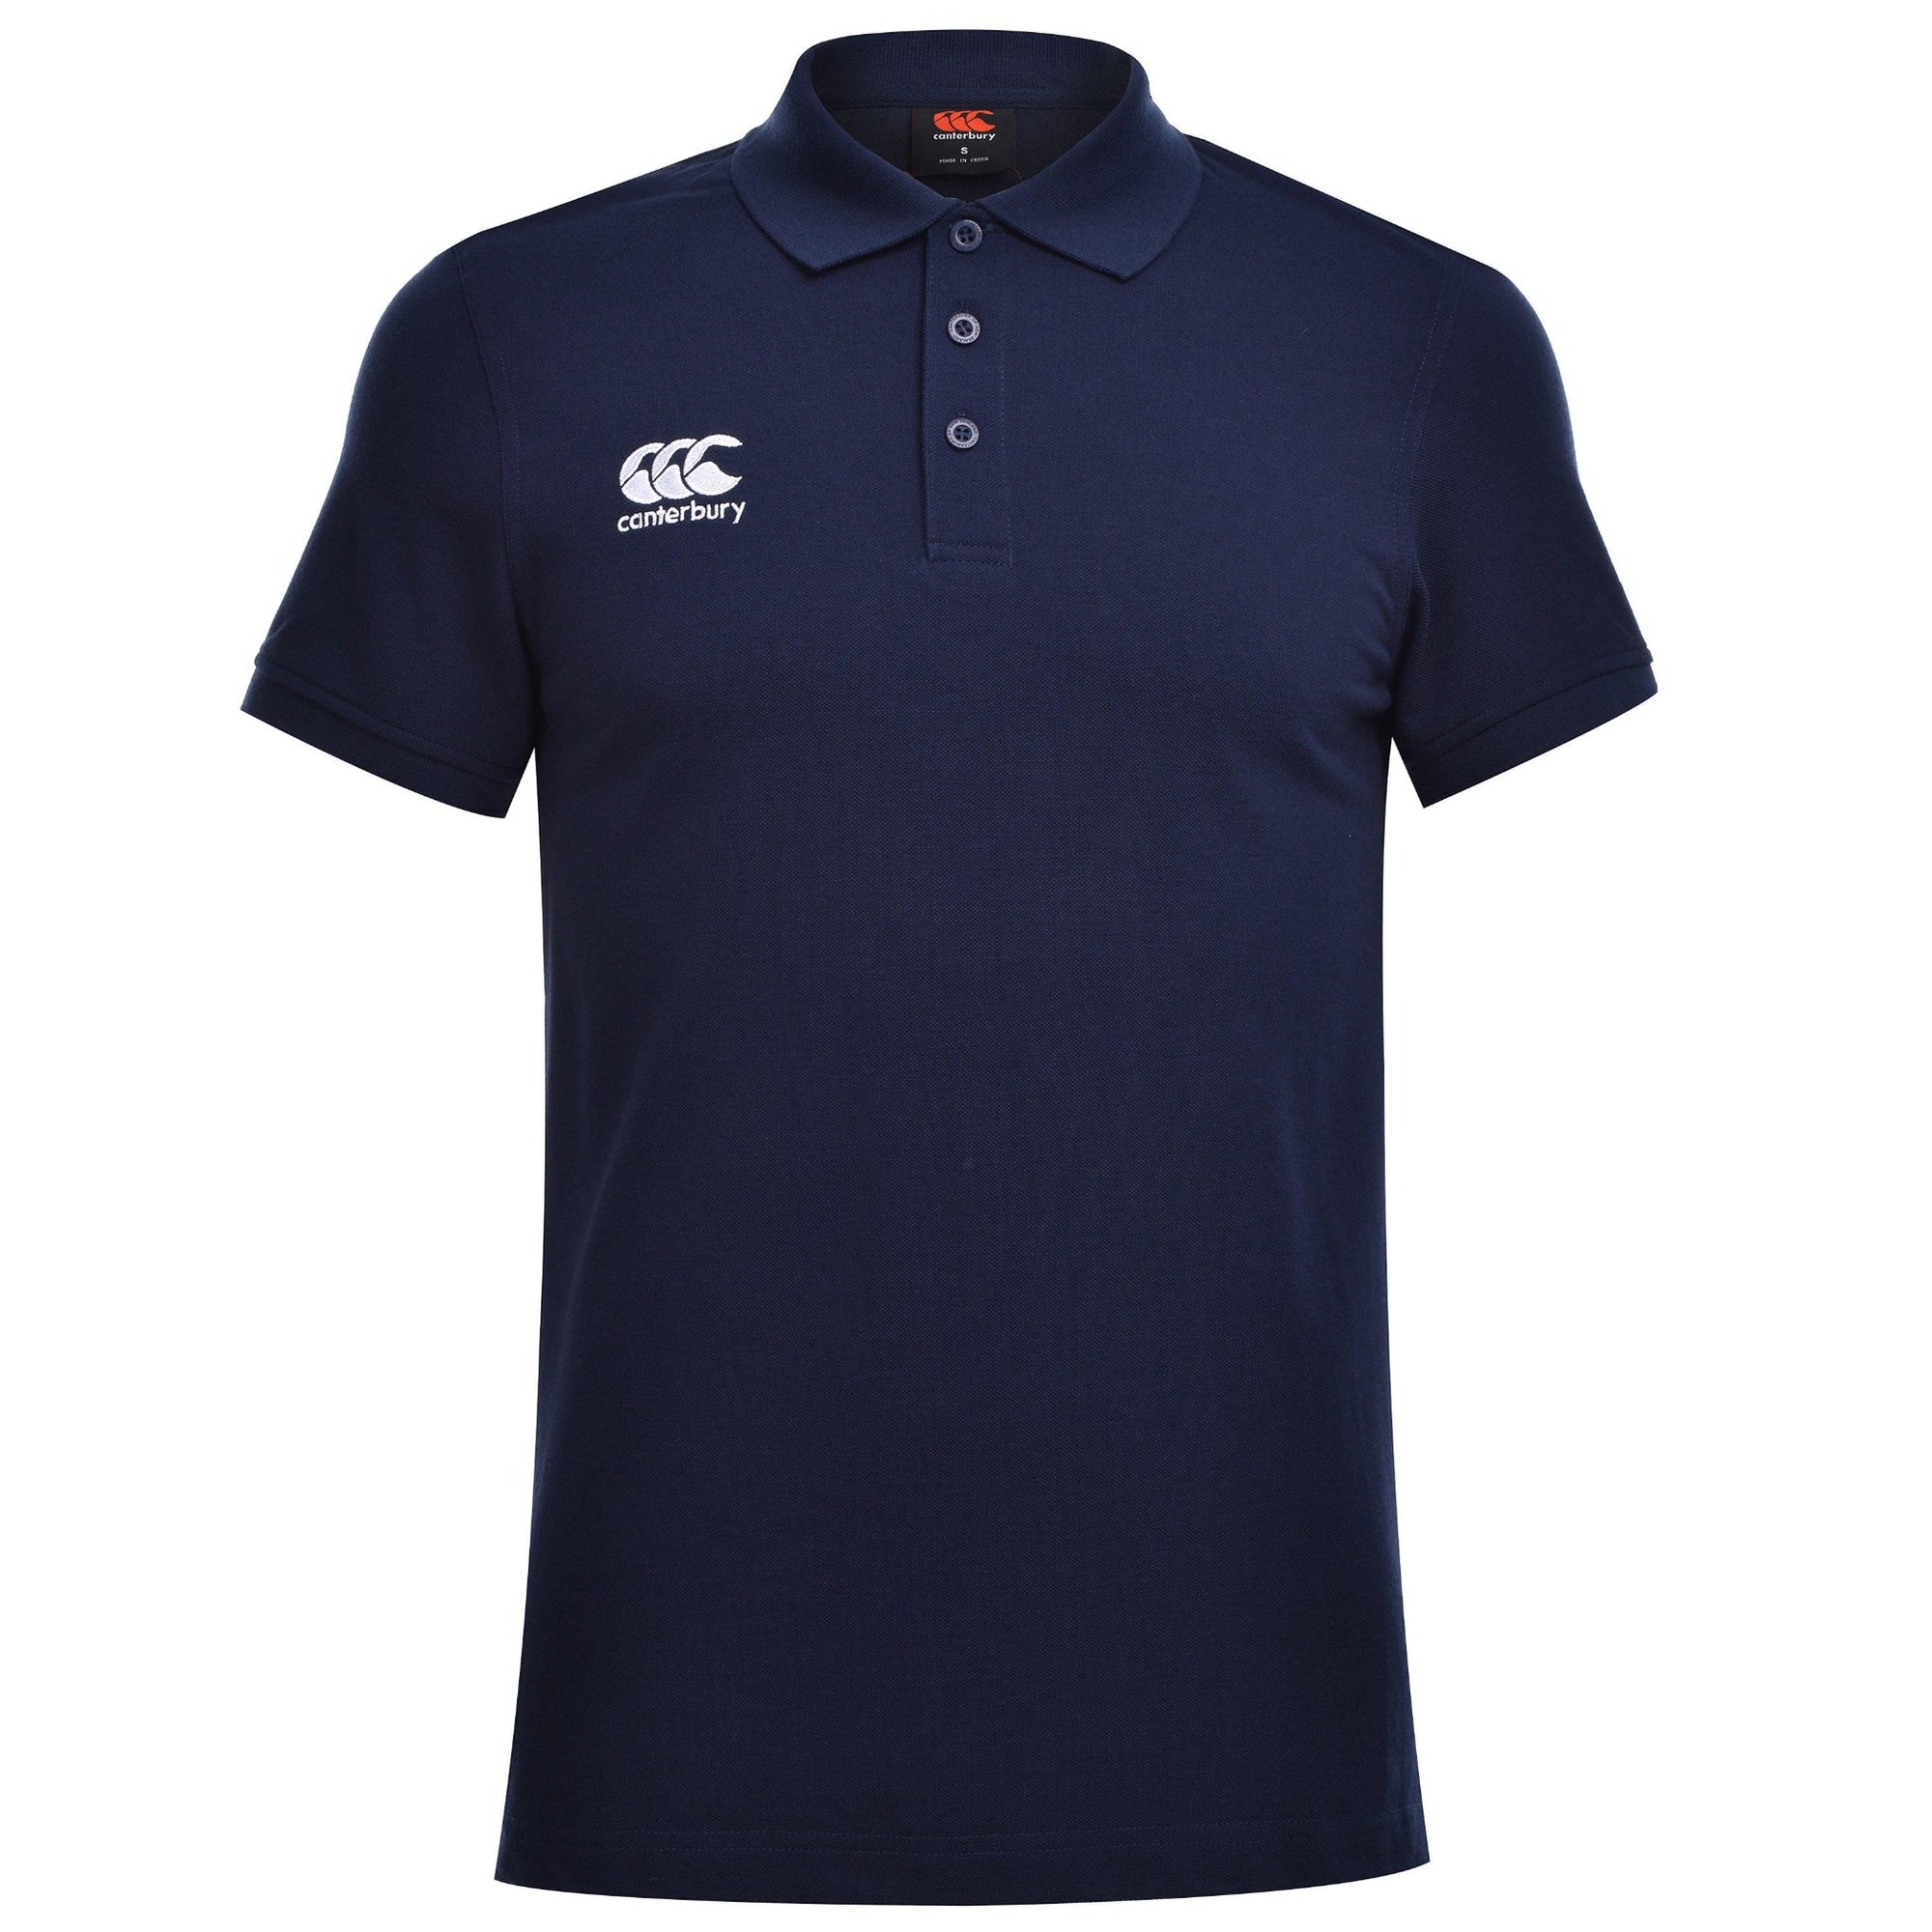 Canterbury CCC Waimak Polo Rugby Shirt - Adult Unisex Sizing XS-4XL - Black